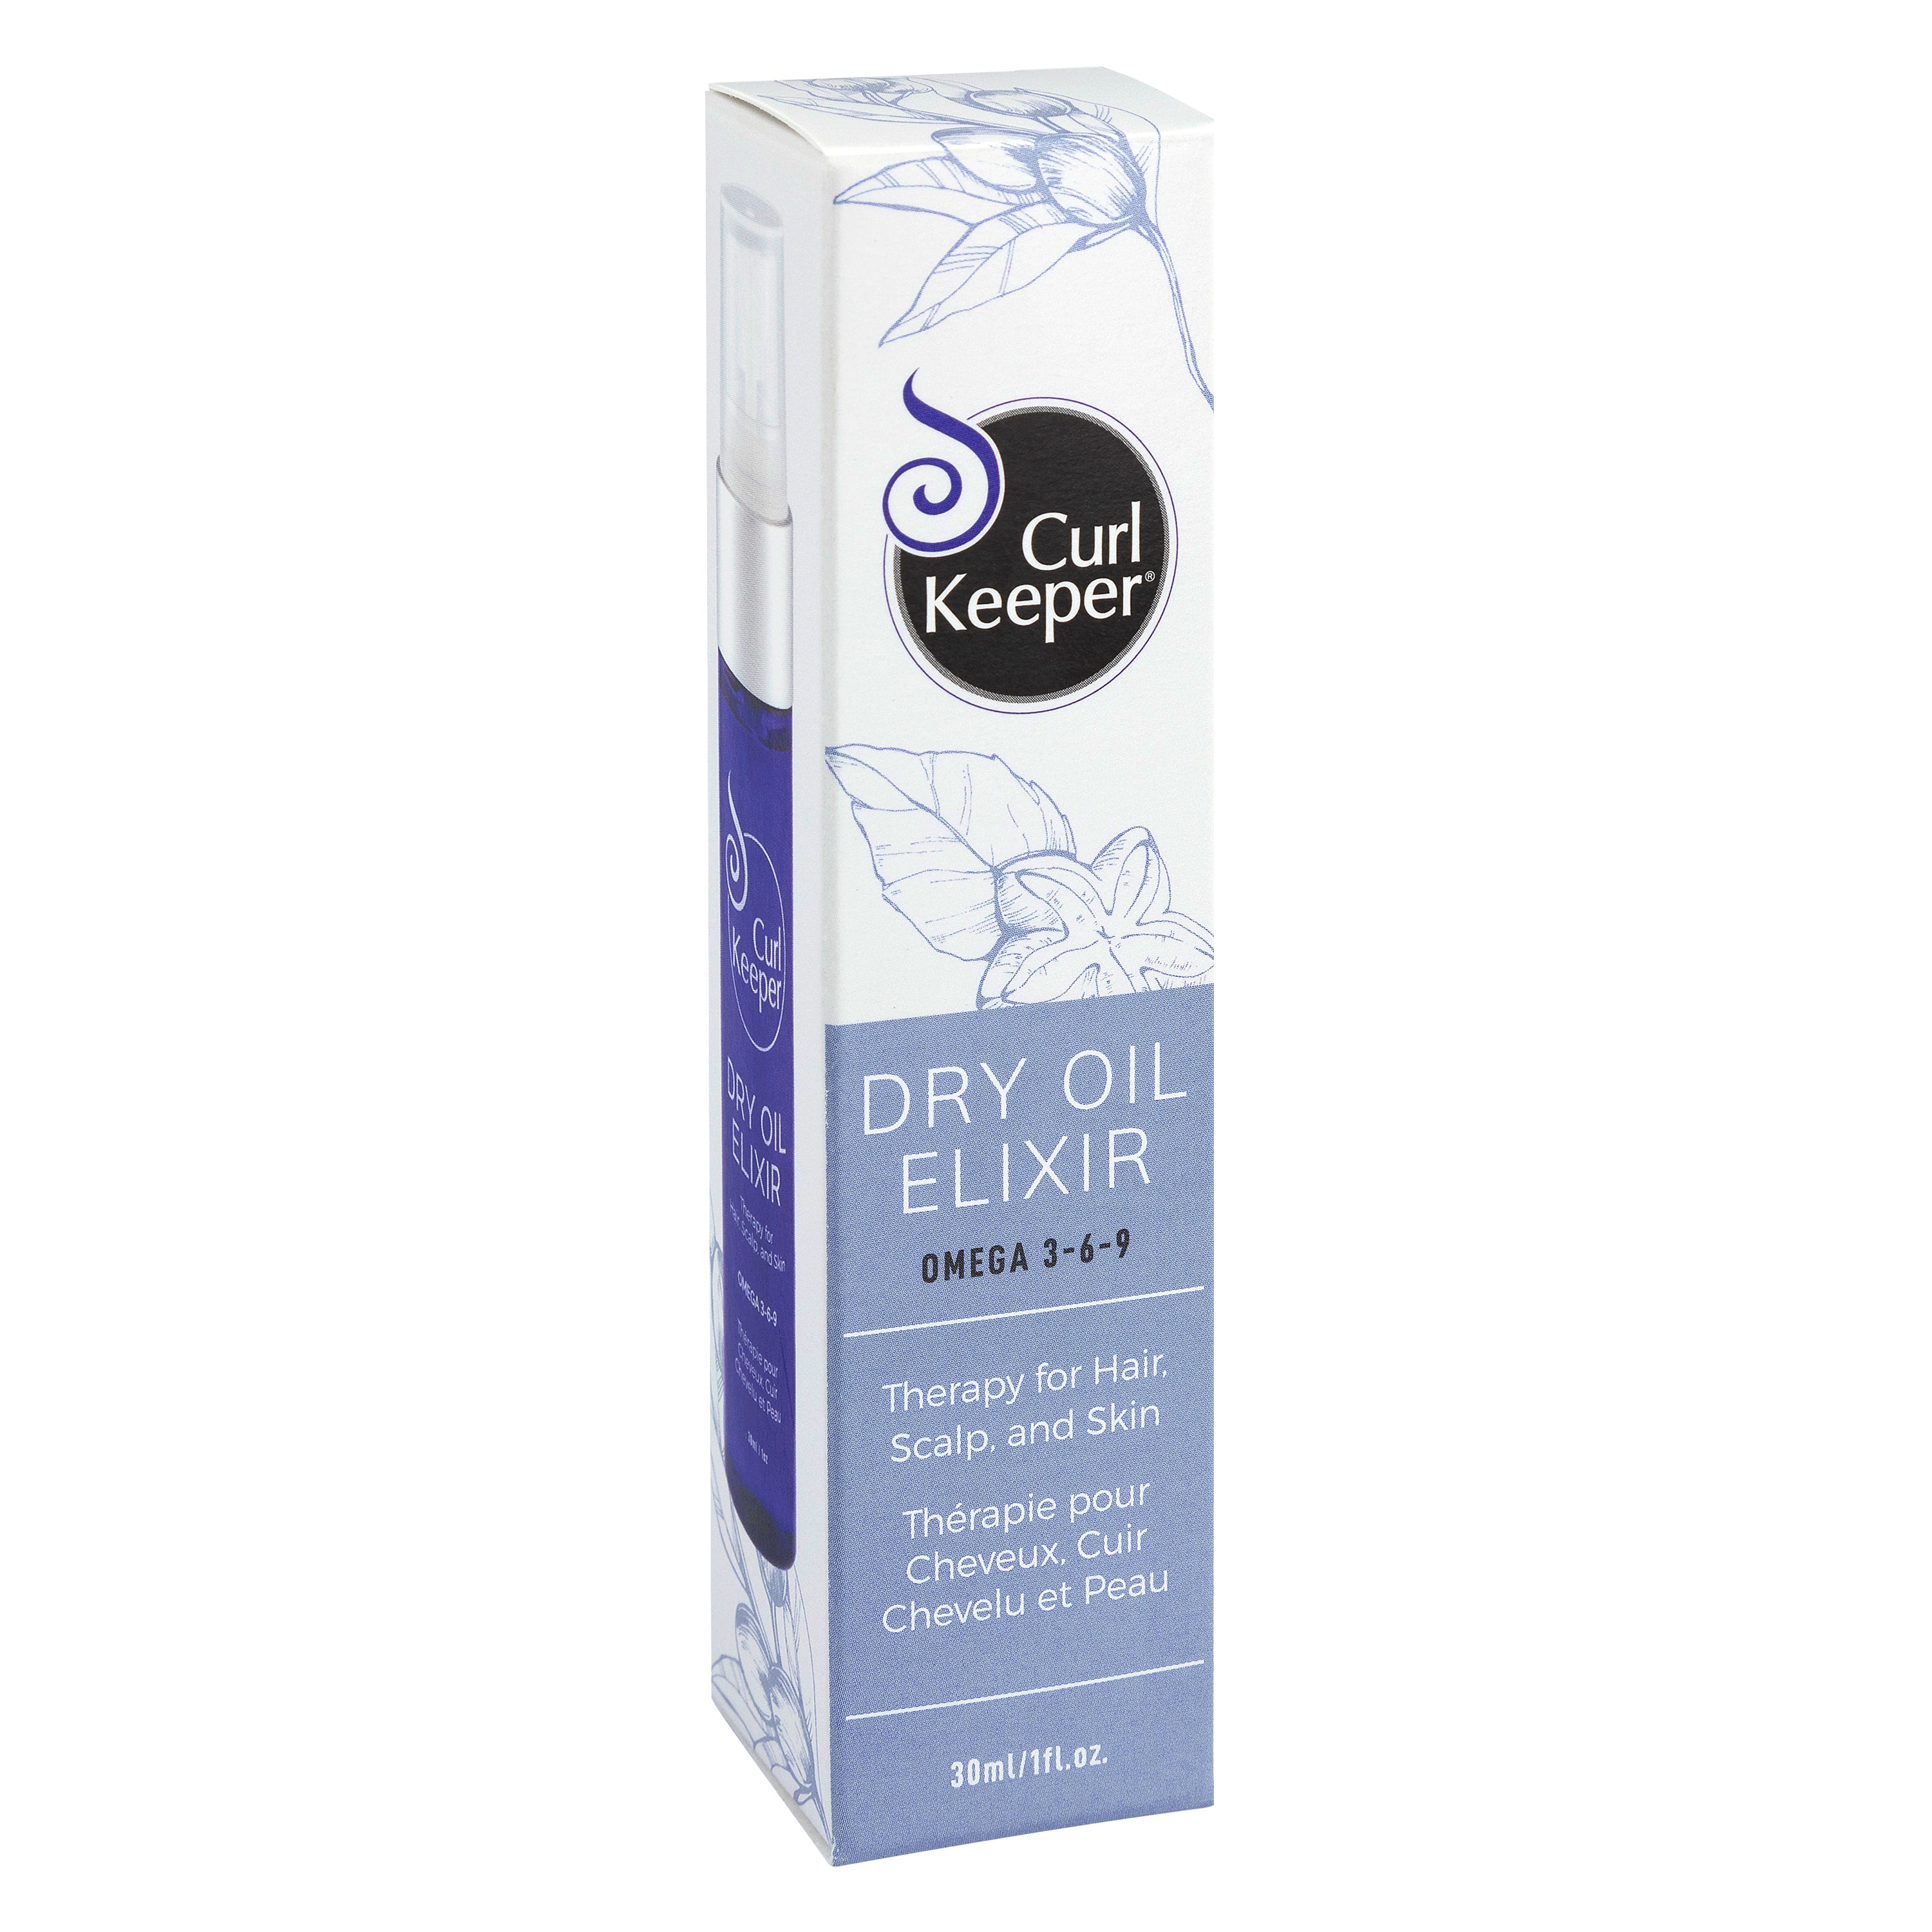 NEW! Curl Keeper® Dry Oil Elixir 